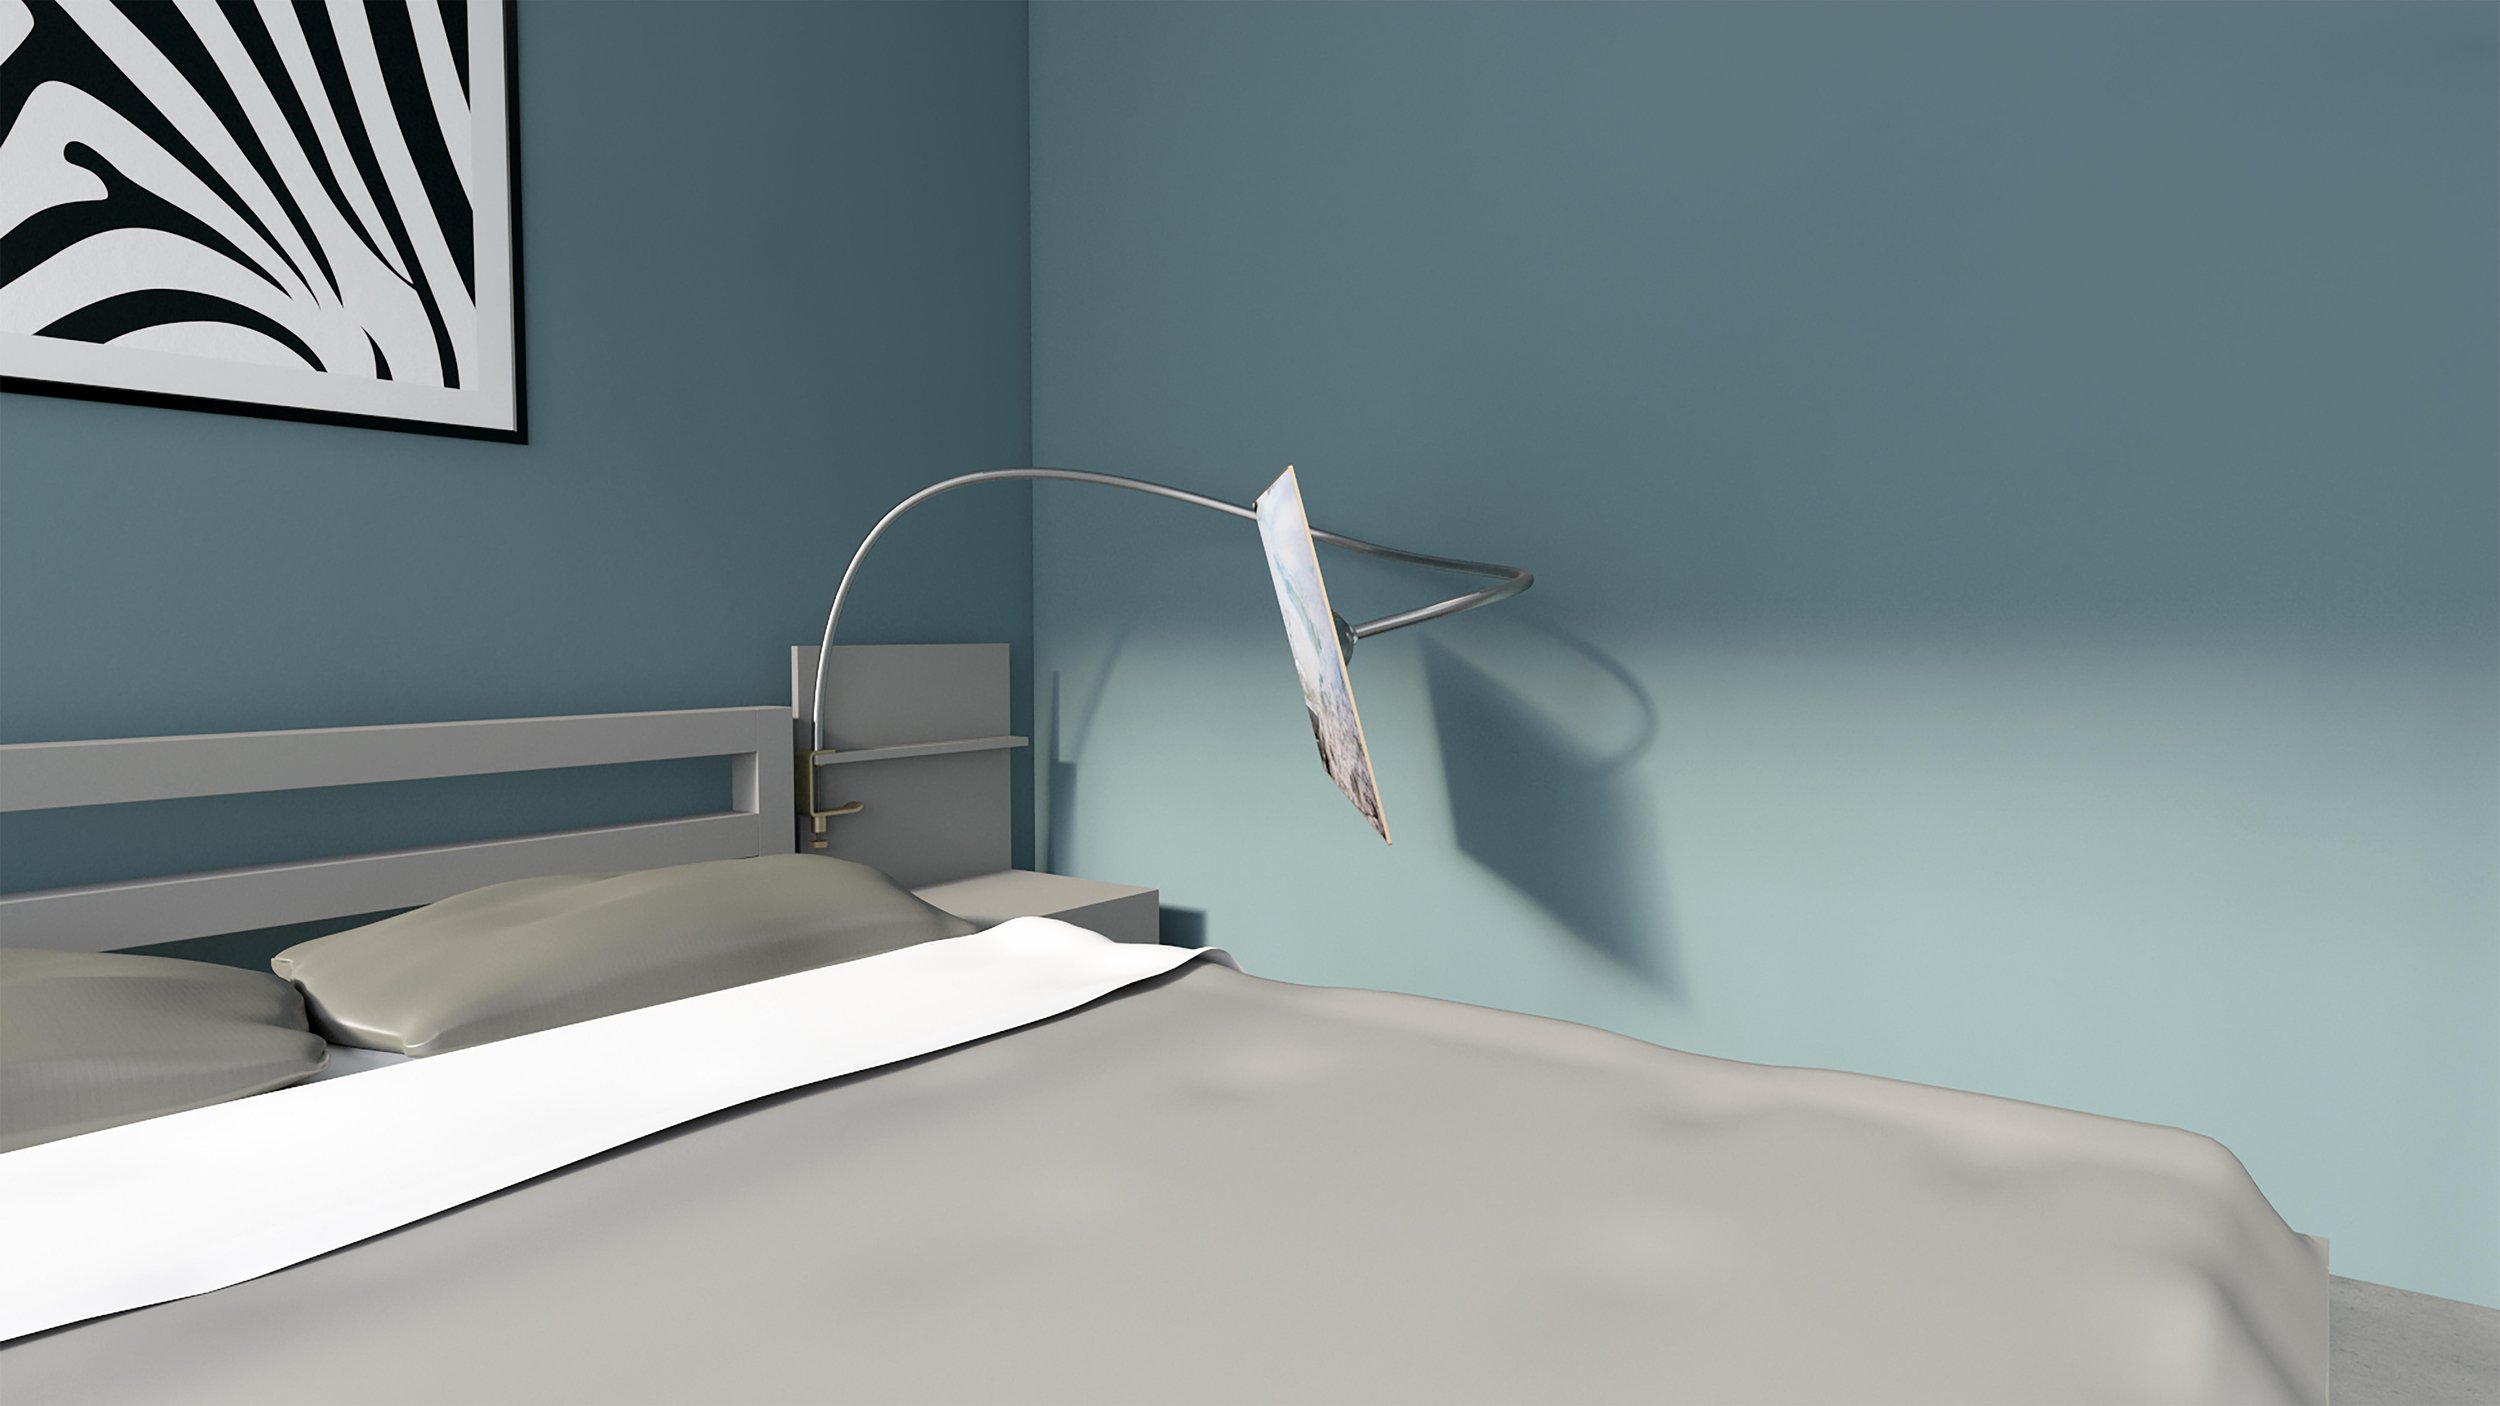 clamp in bedside.jpg